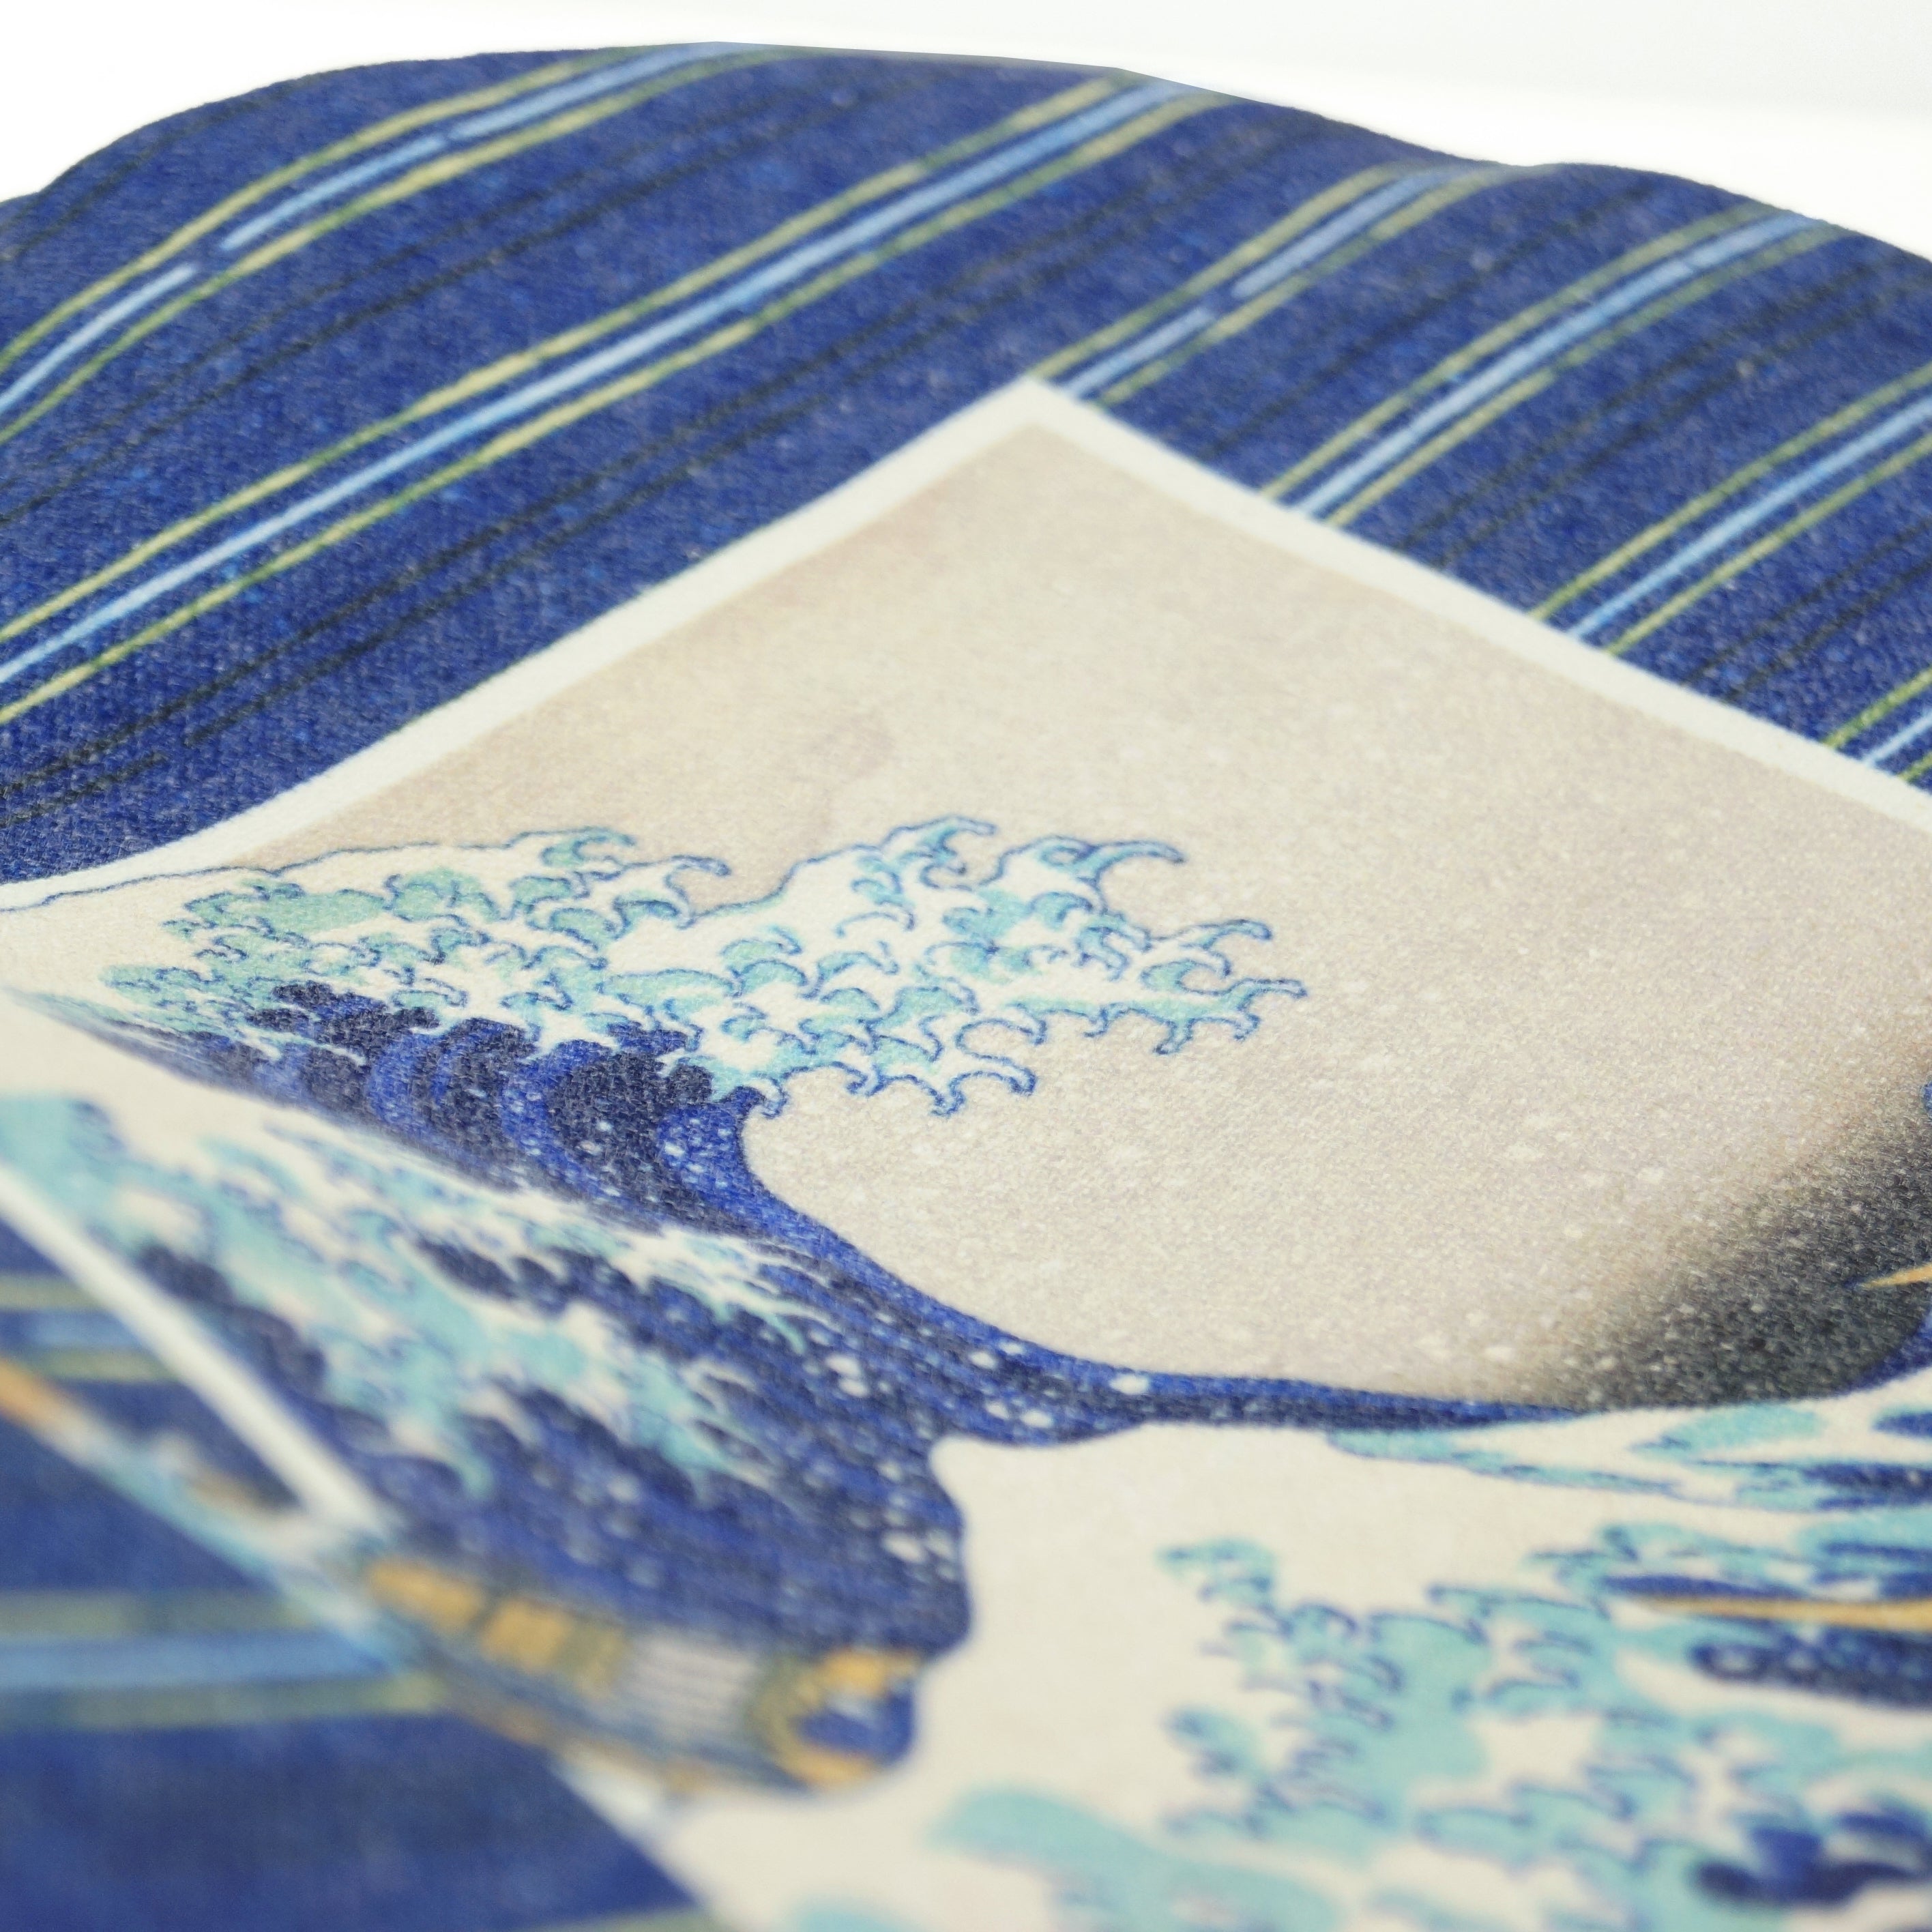 <tc>Rucksack S+ Backpack Katsushika Hokusai "Off the Kanagawa wave"</tc>